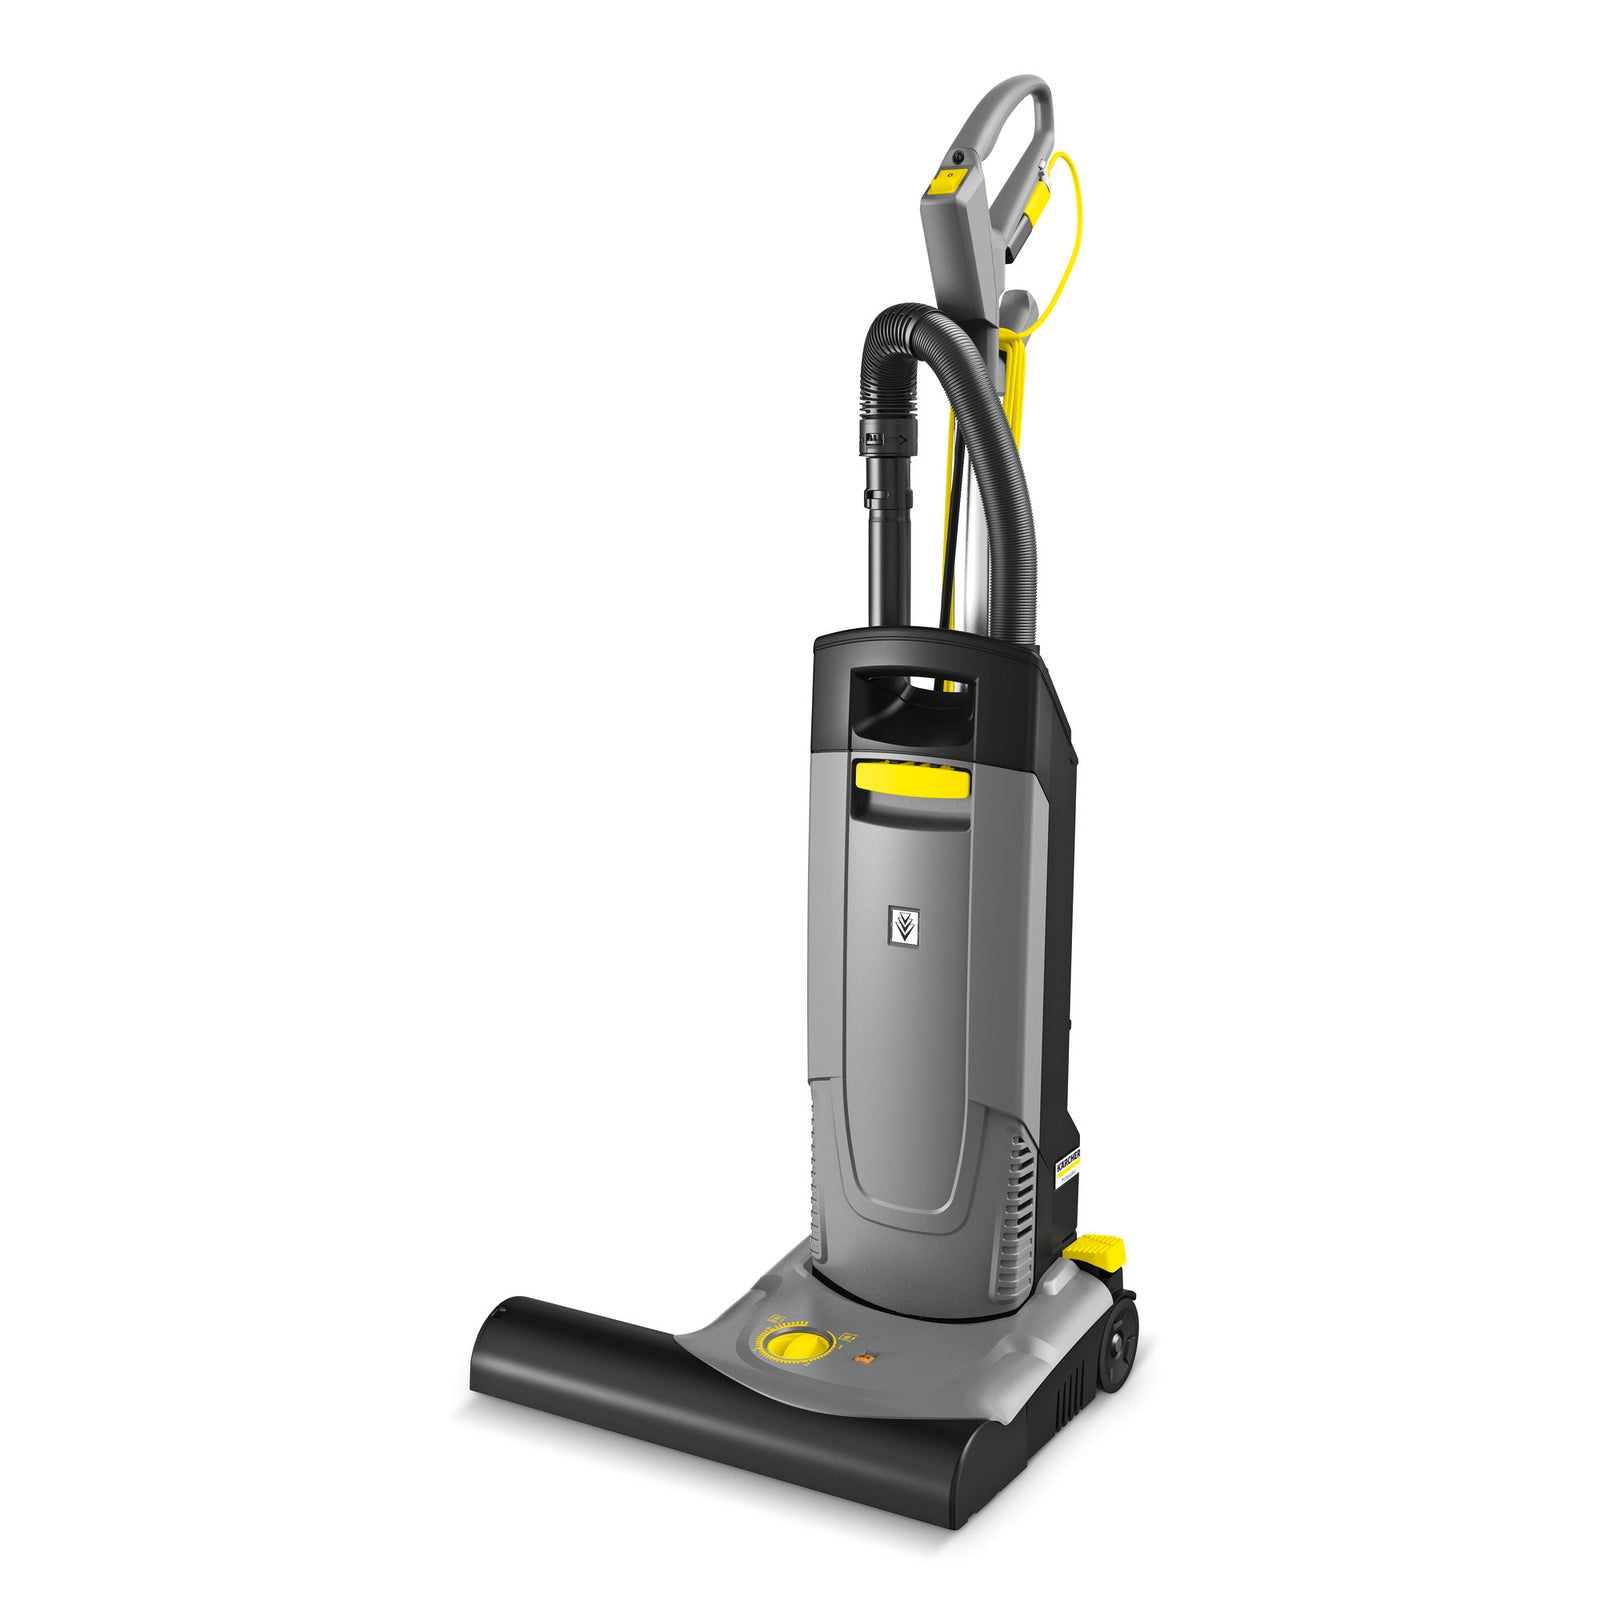 Kärcher carpet brush vacuum cleaner CV 48/2 Adv